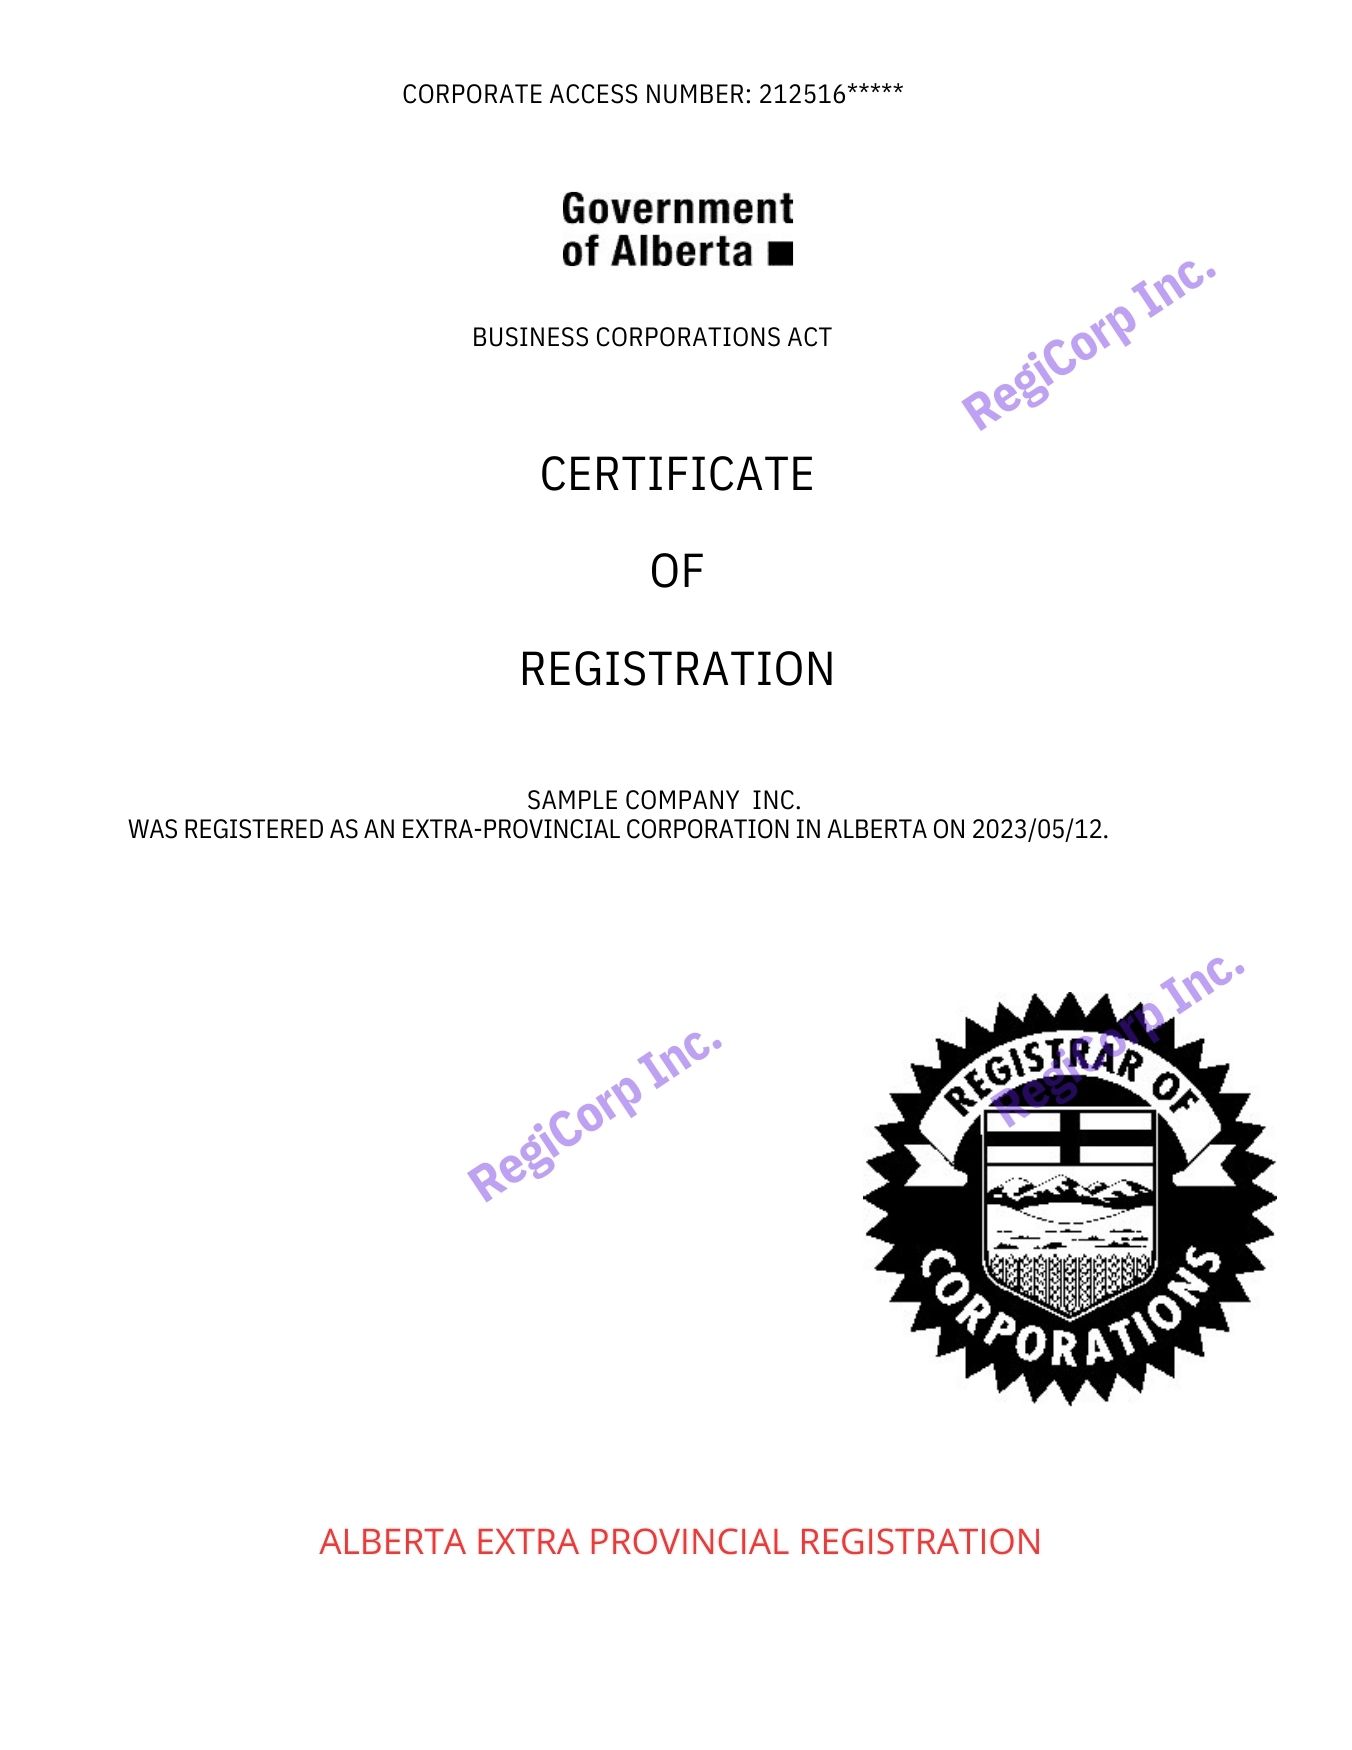 Alberta Extra Provincial Registration